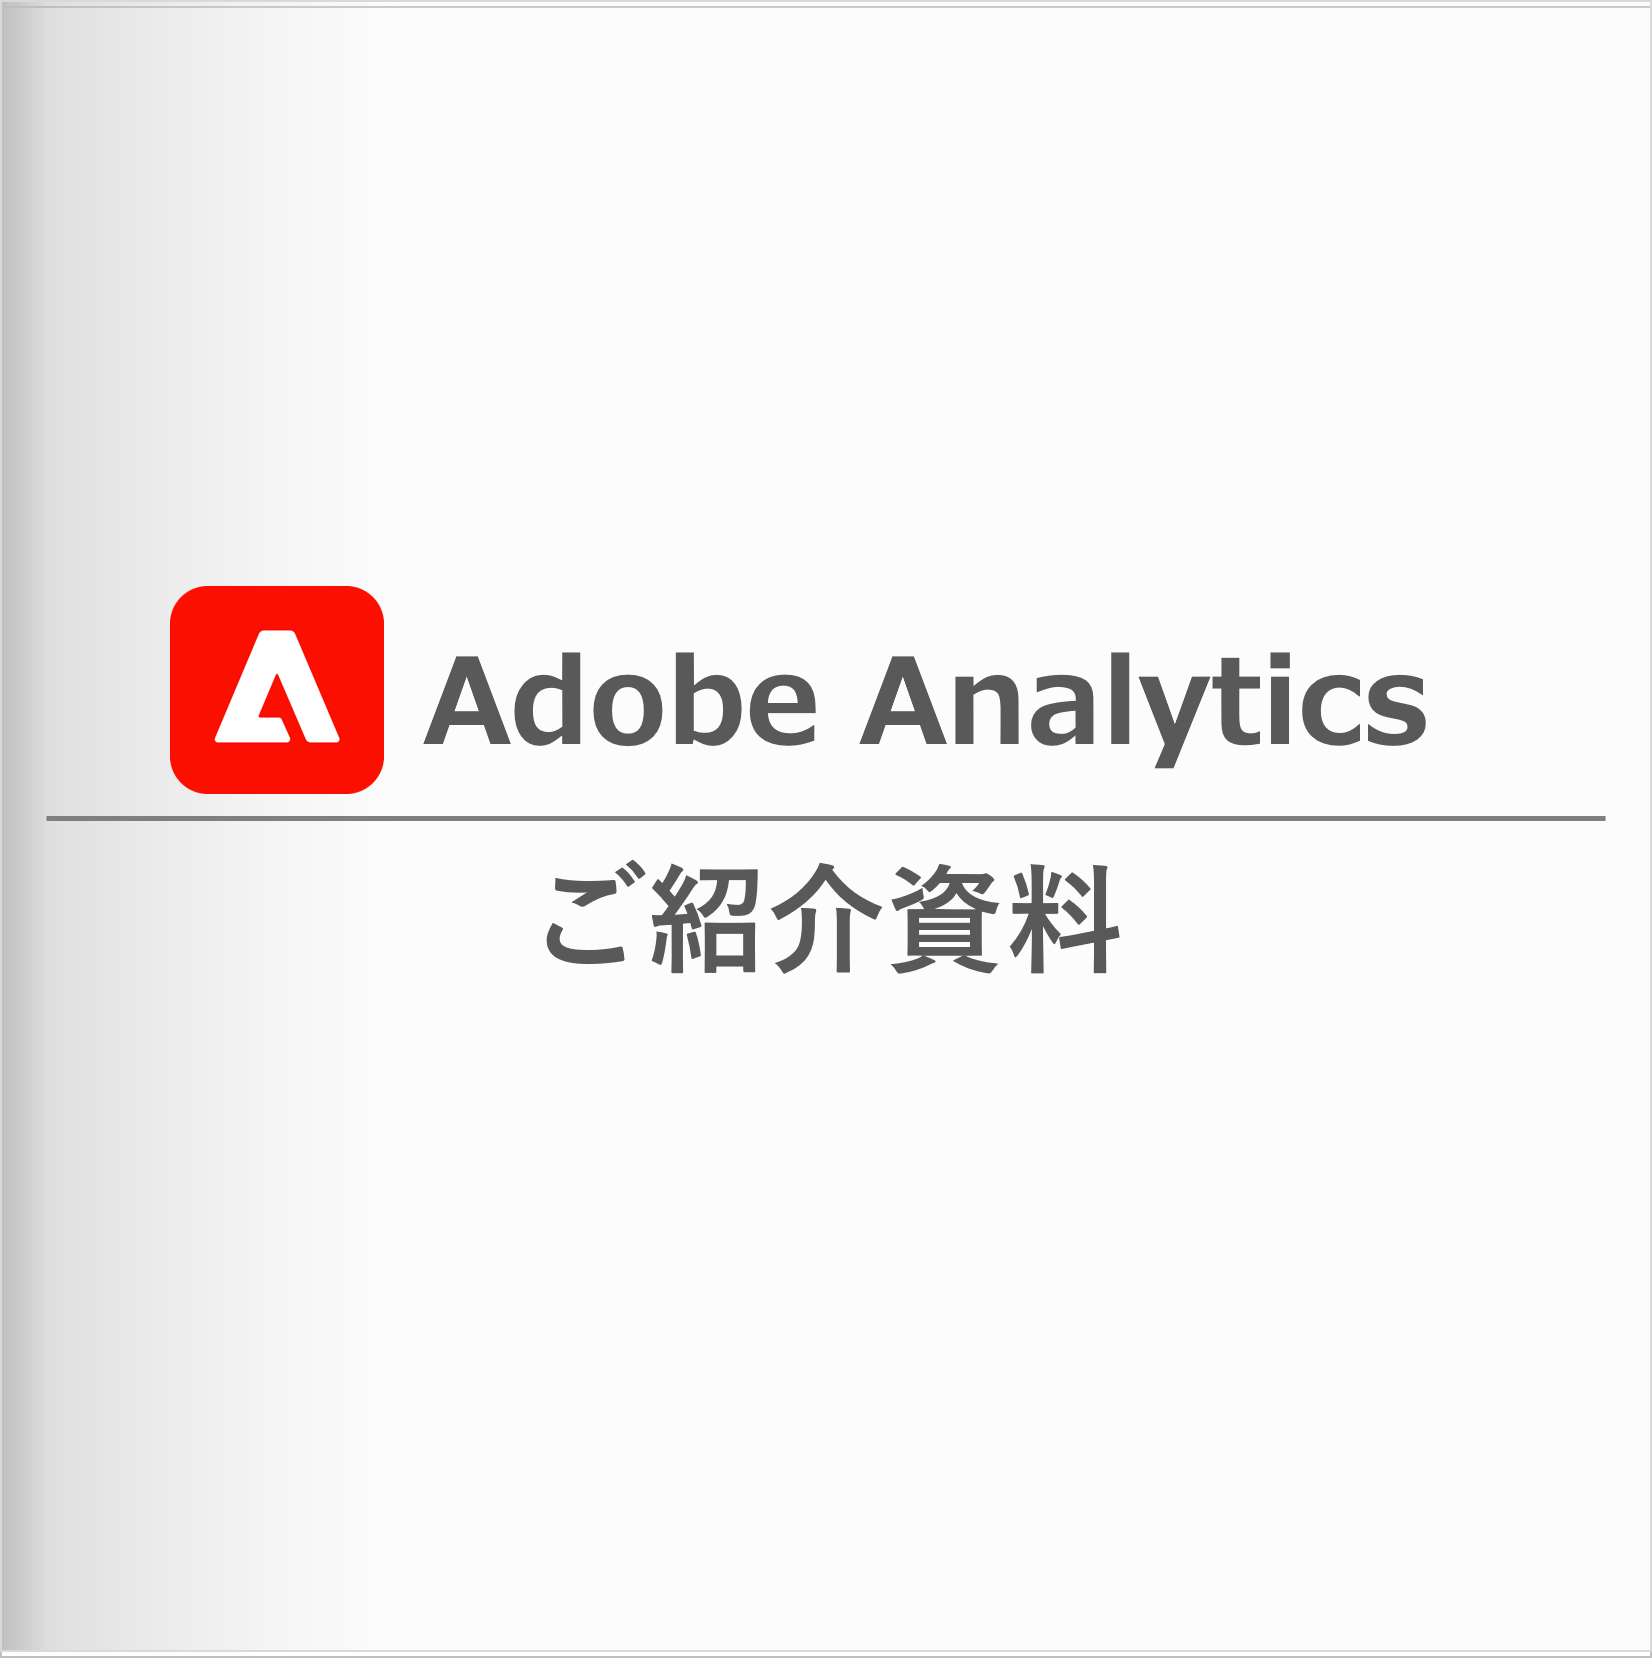 Adobe Analytics ご紹介資料